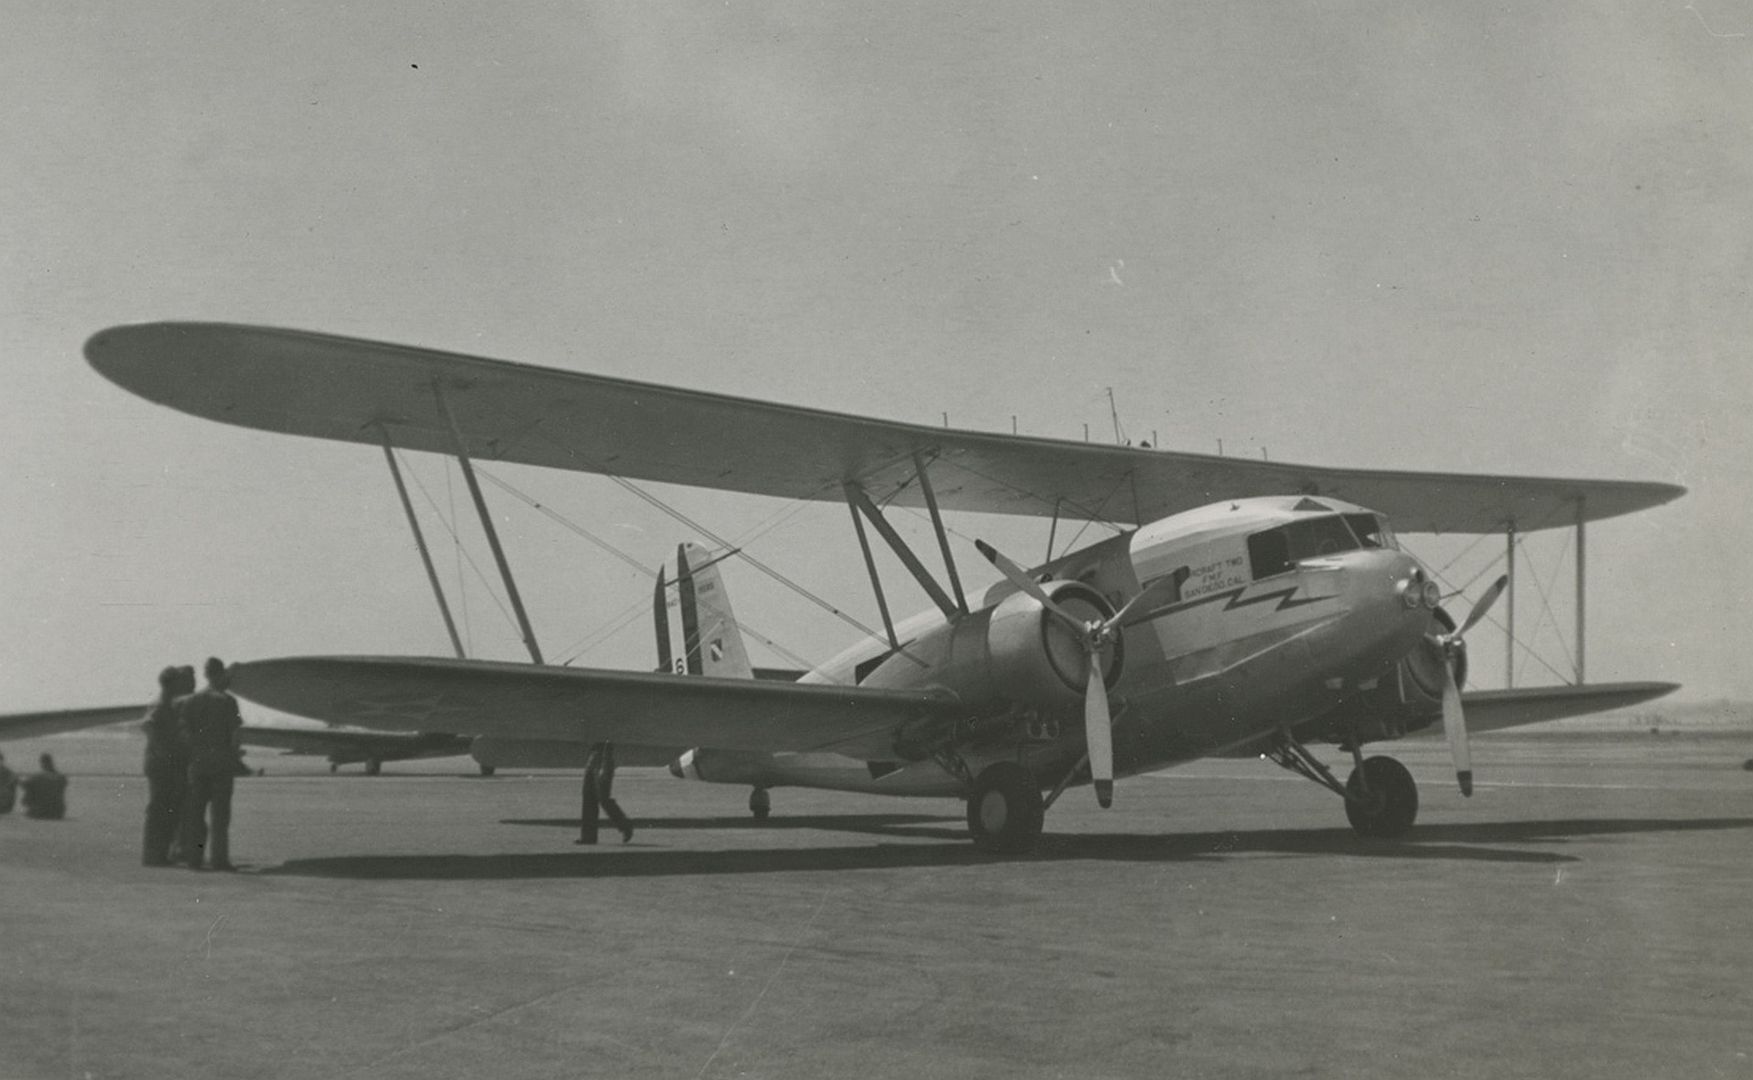 1 Condor Aircraft Parked At An Airfield